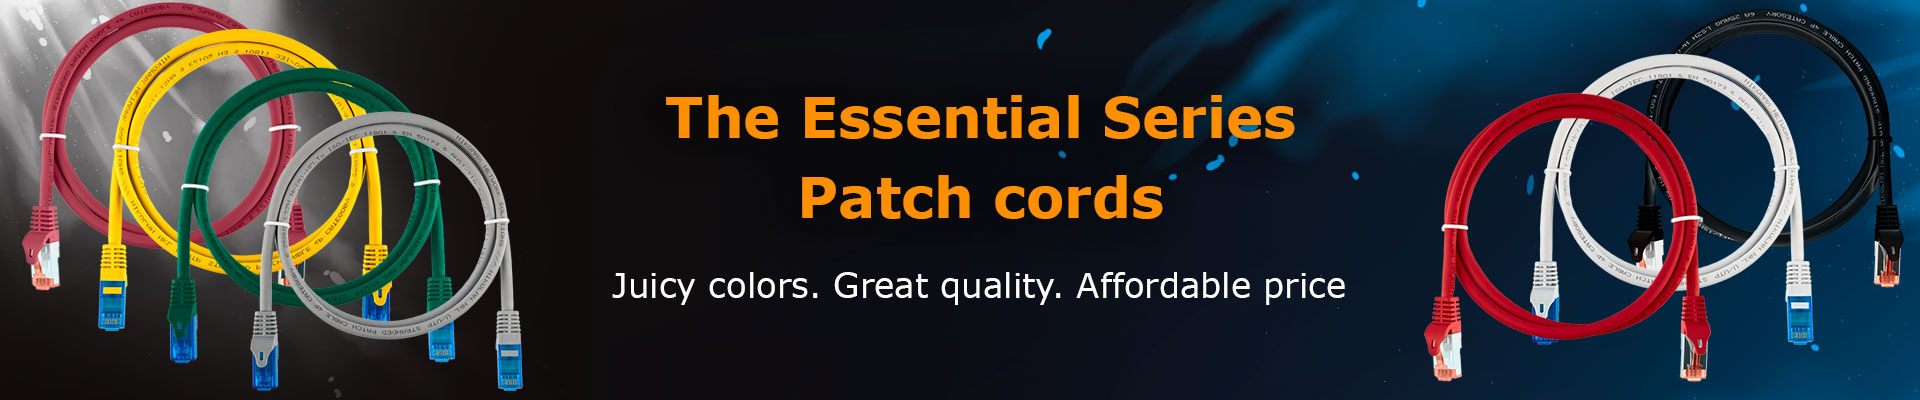 Essential patchcords banner